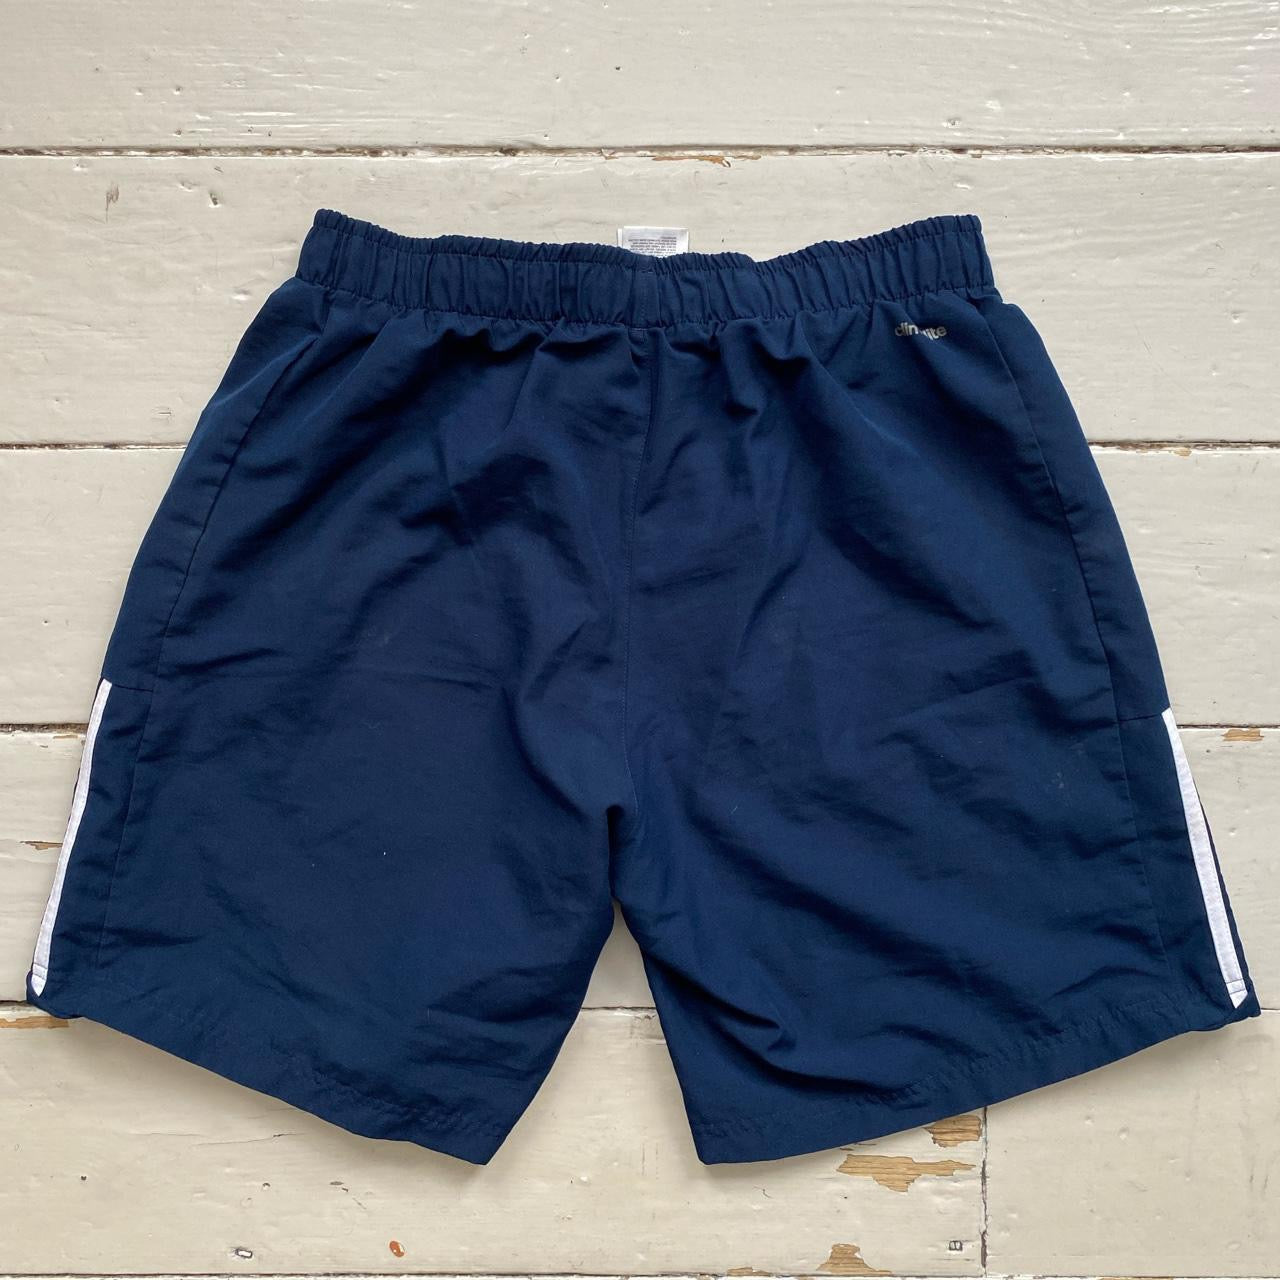 Adidas Navy Shell Shorts (Large)